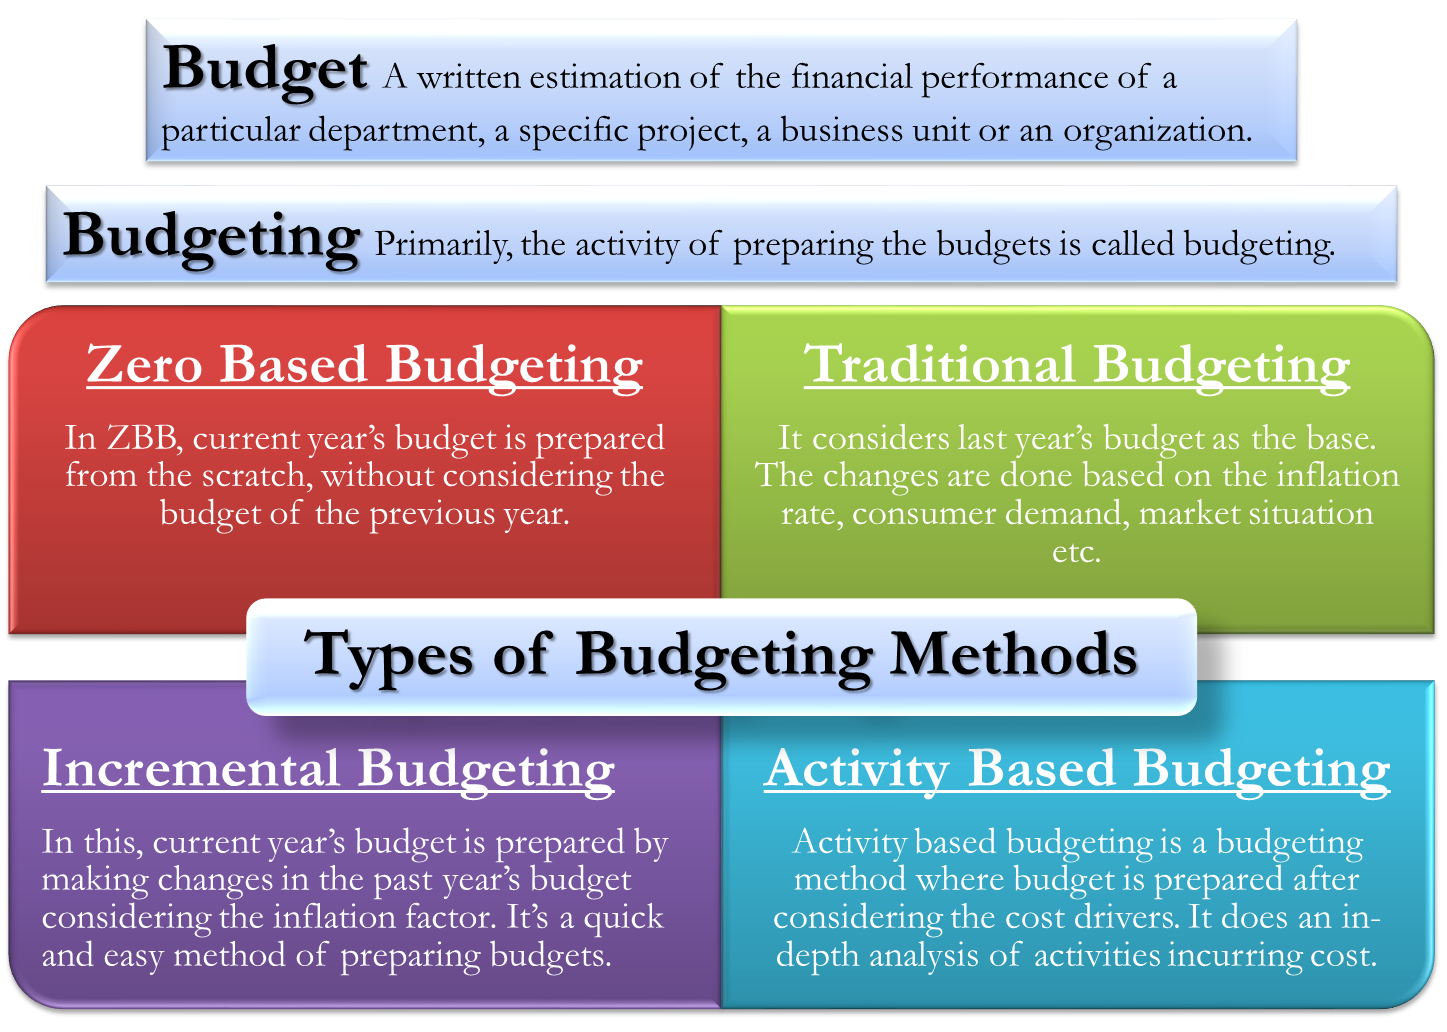 Budgeting methods. Types of budget. Activity-based Budgeting. Activity based Budgeting объекты затрат.